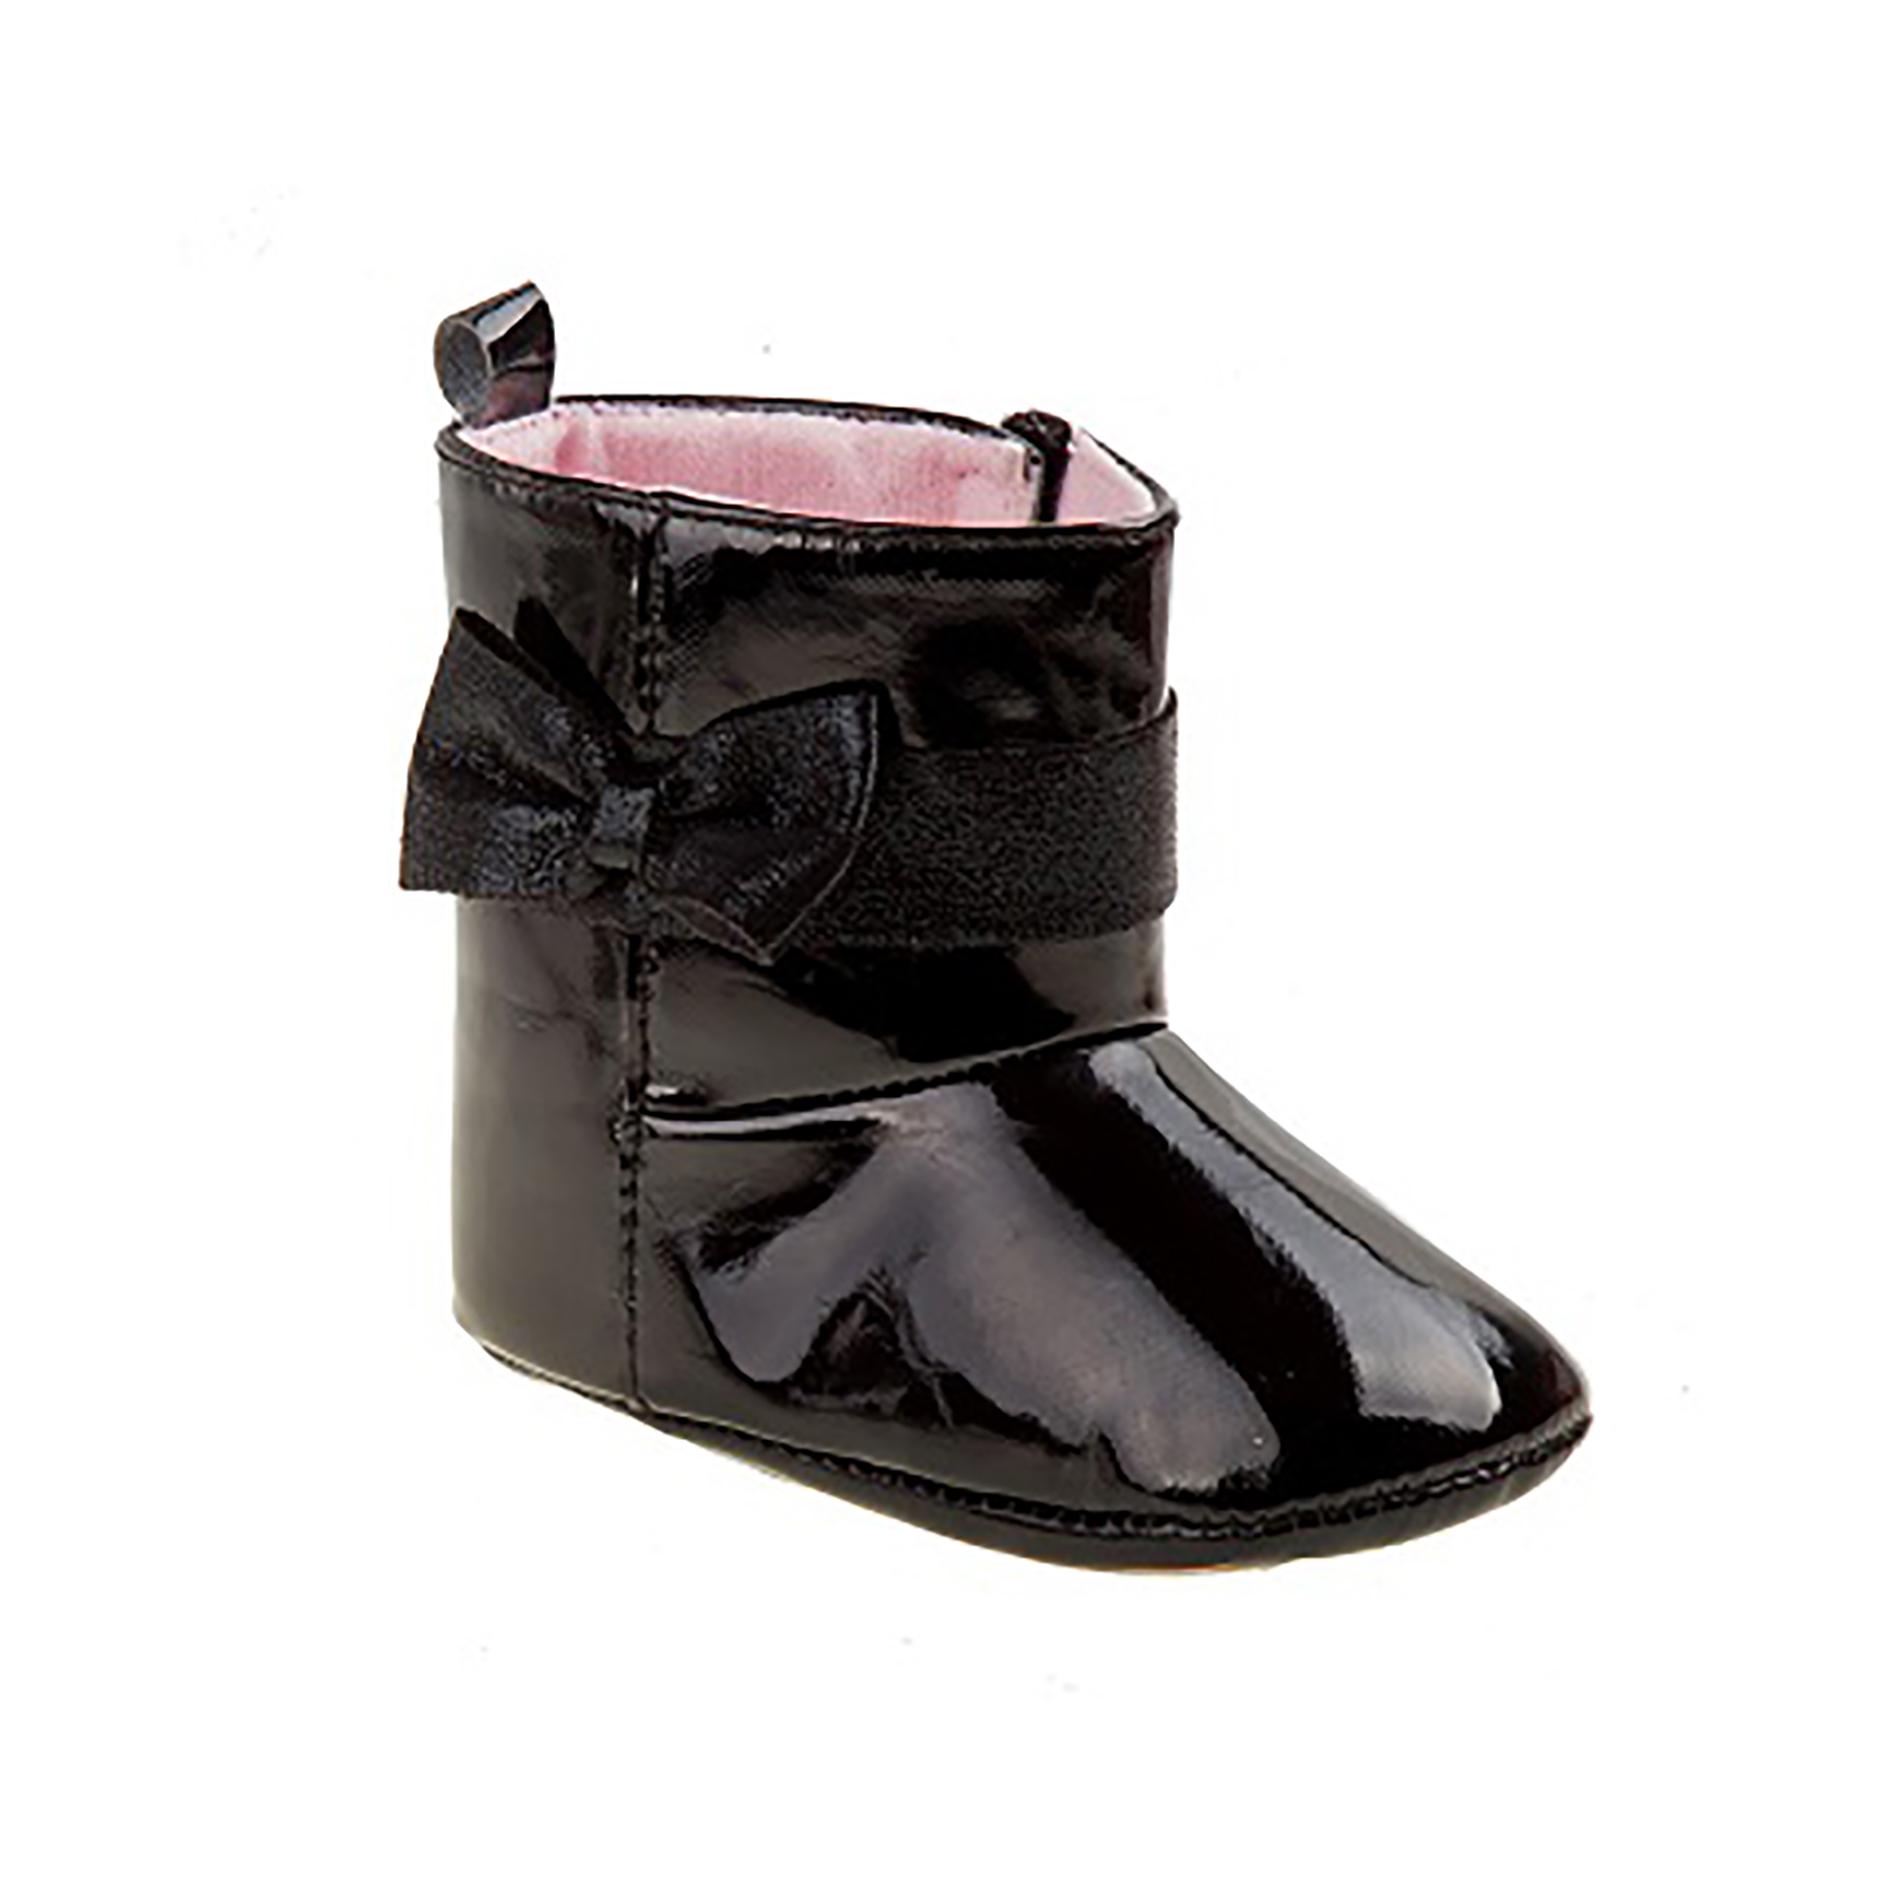 Laura Ashley Baby Girls' Fashion Boot - Black